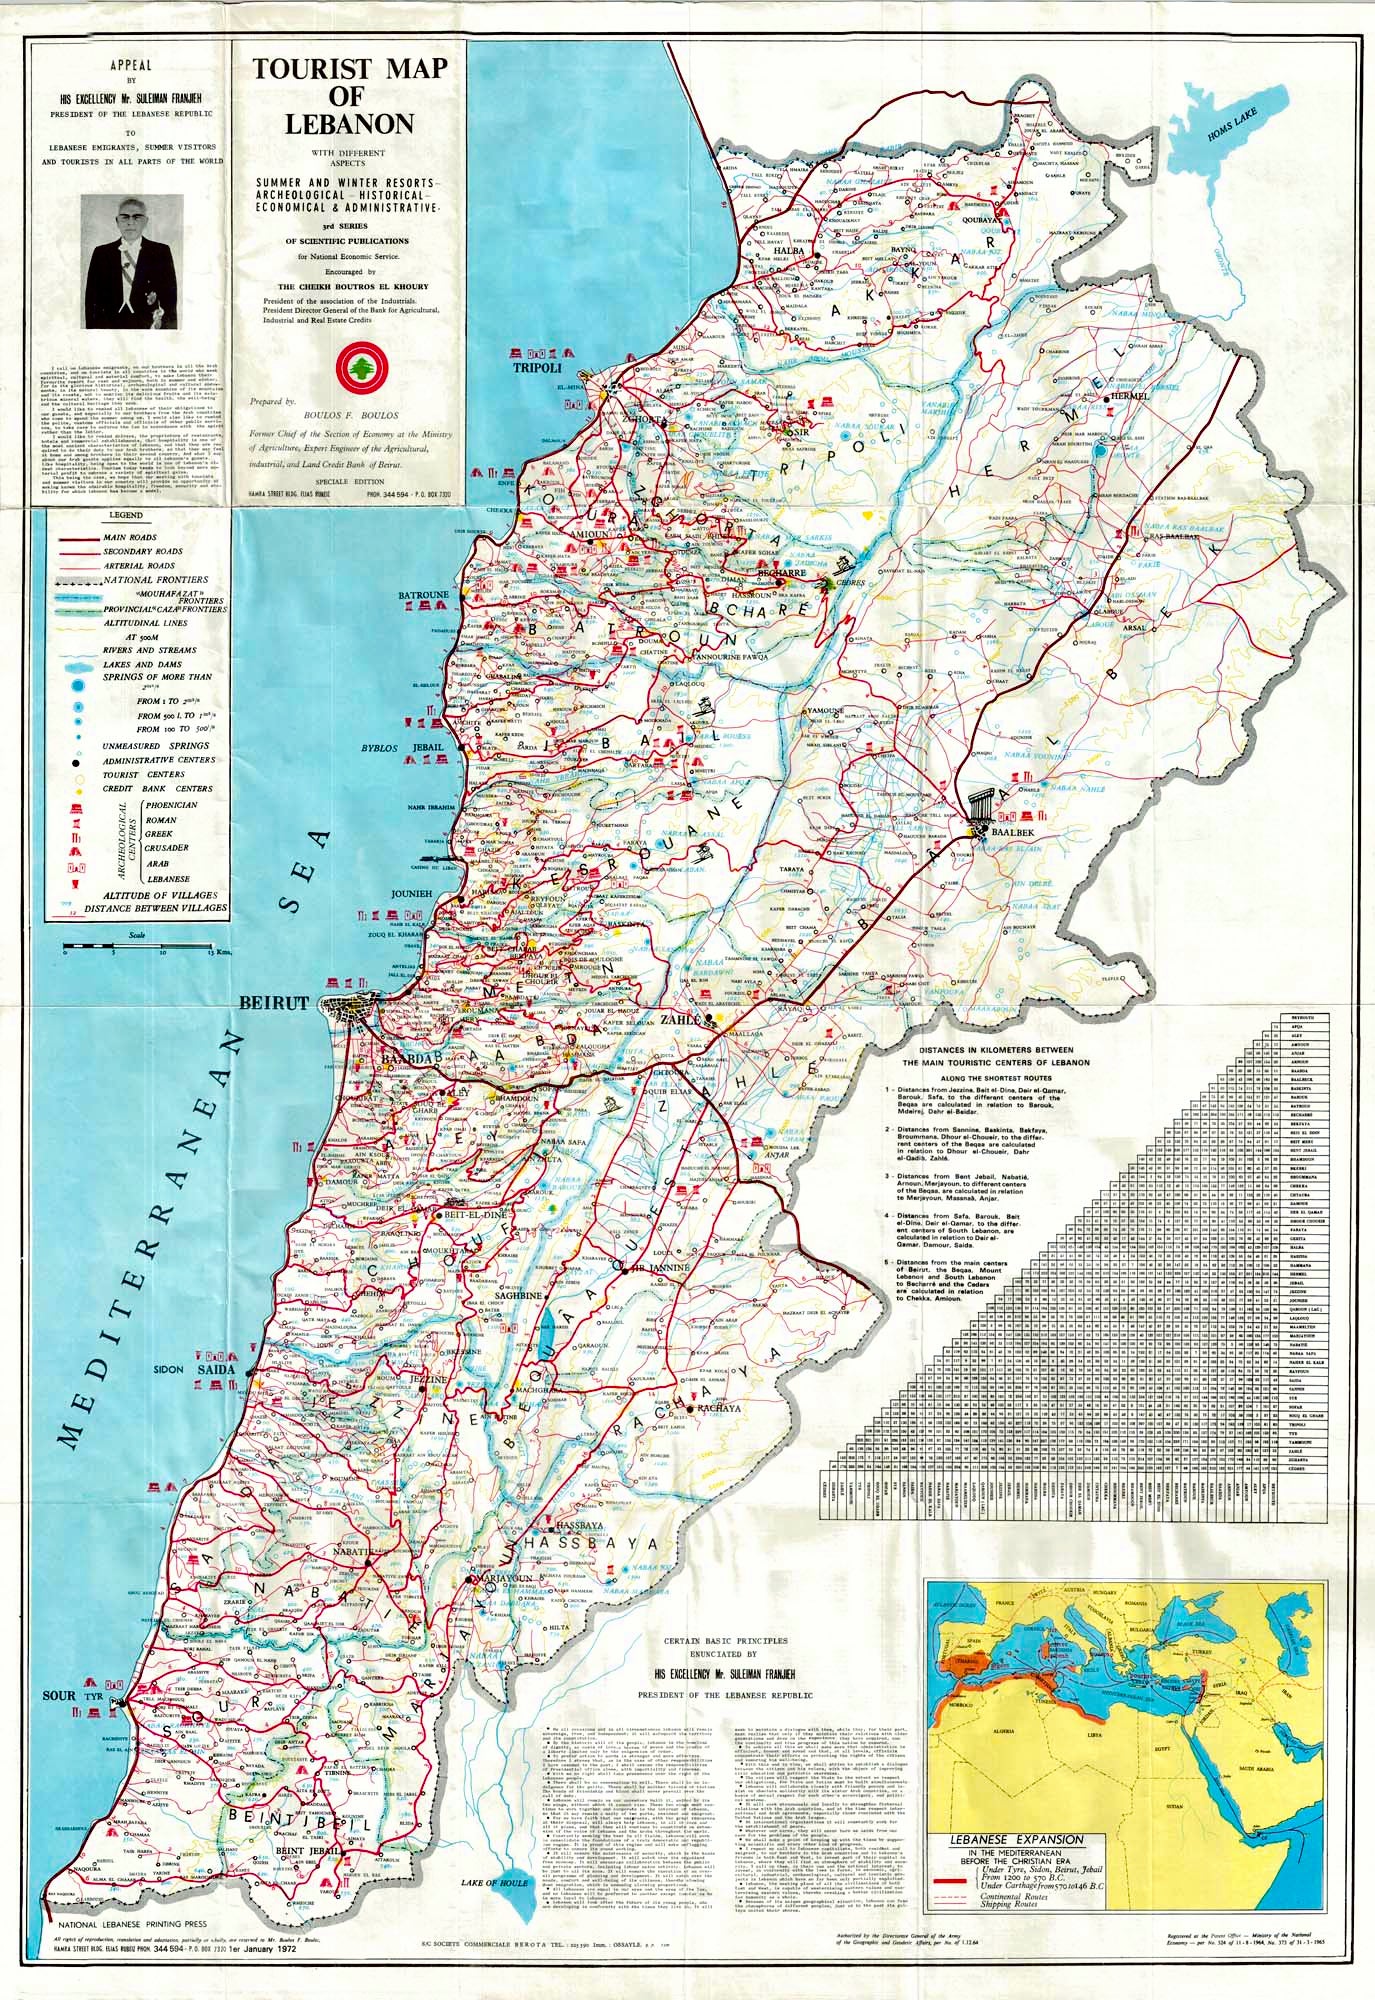 (Lebanon) Tourist Map Of Lebanon